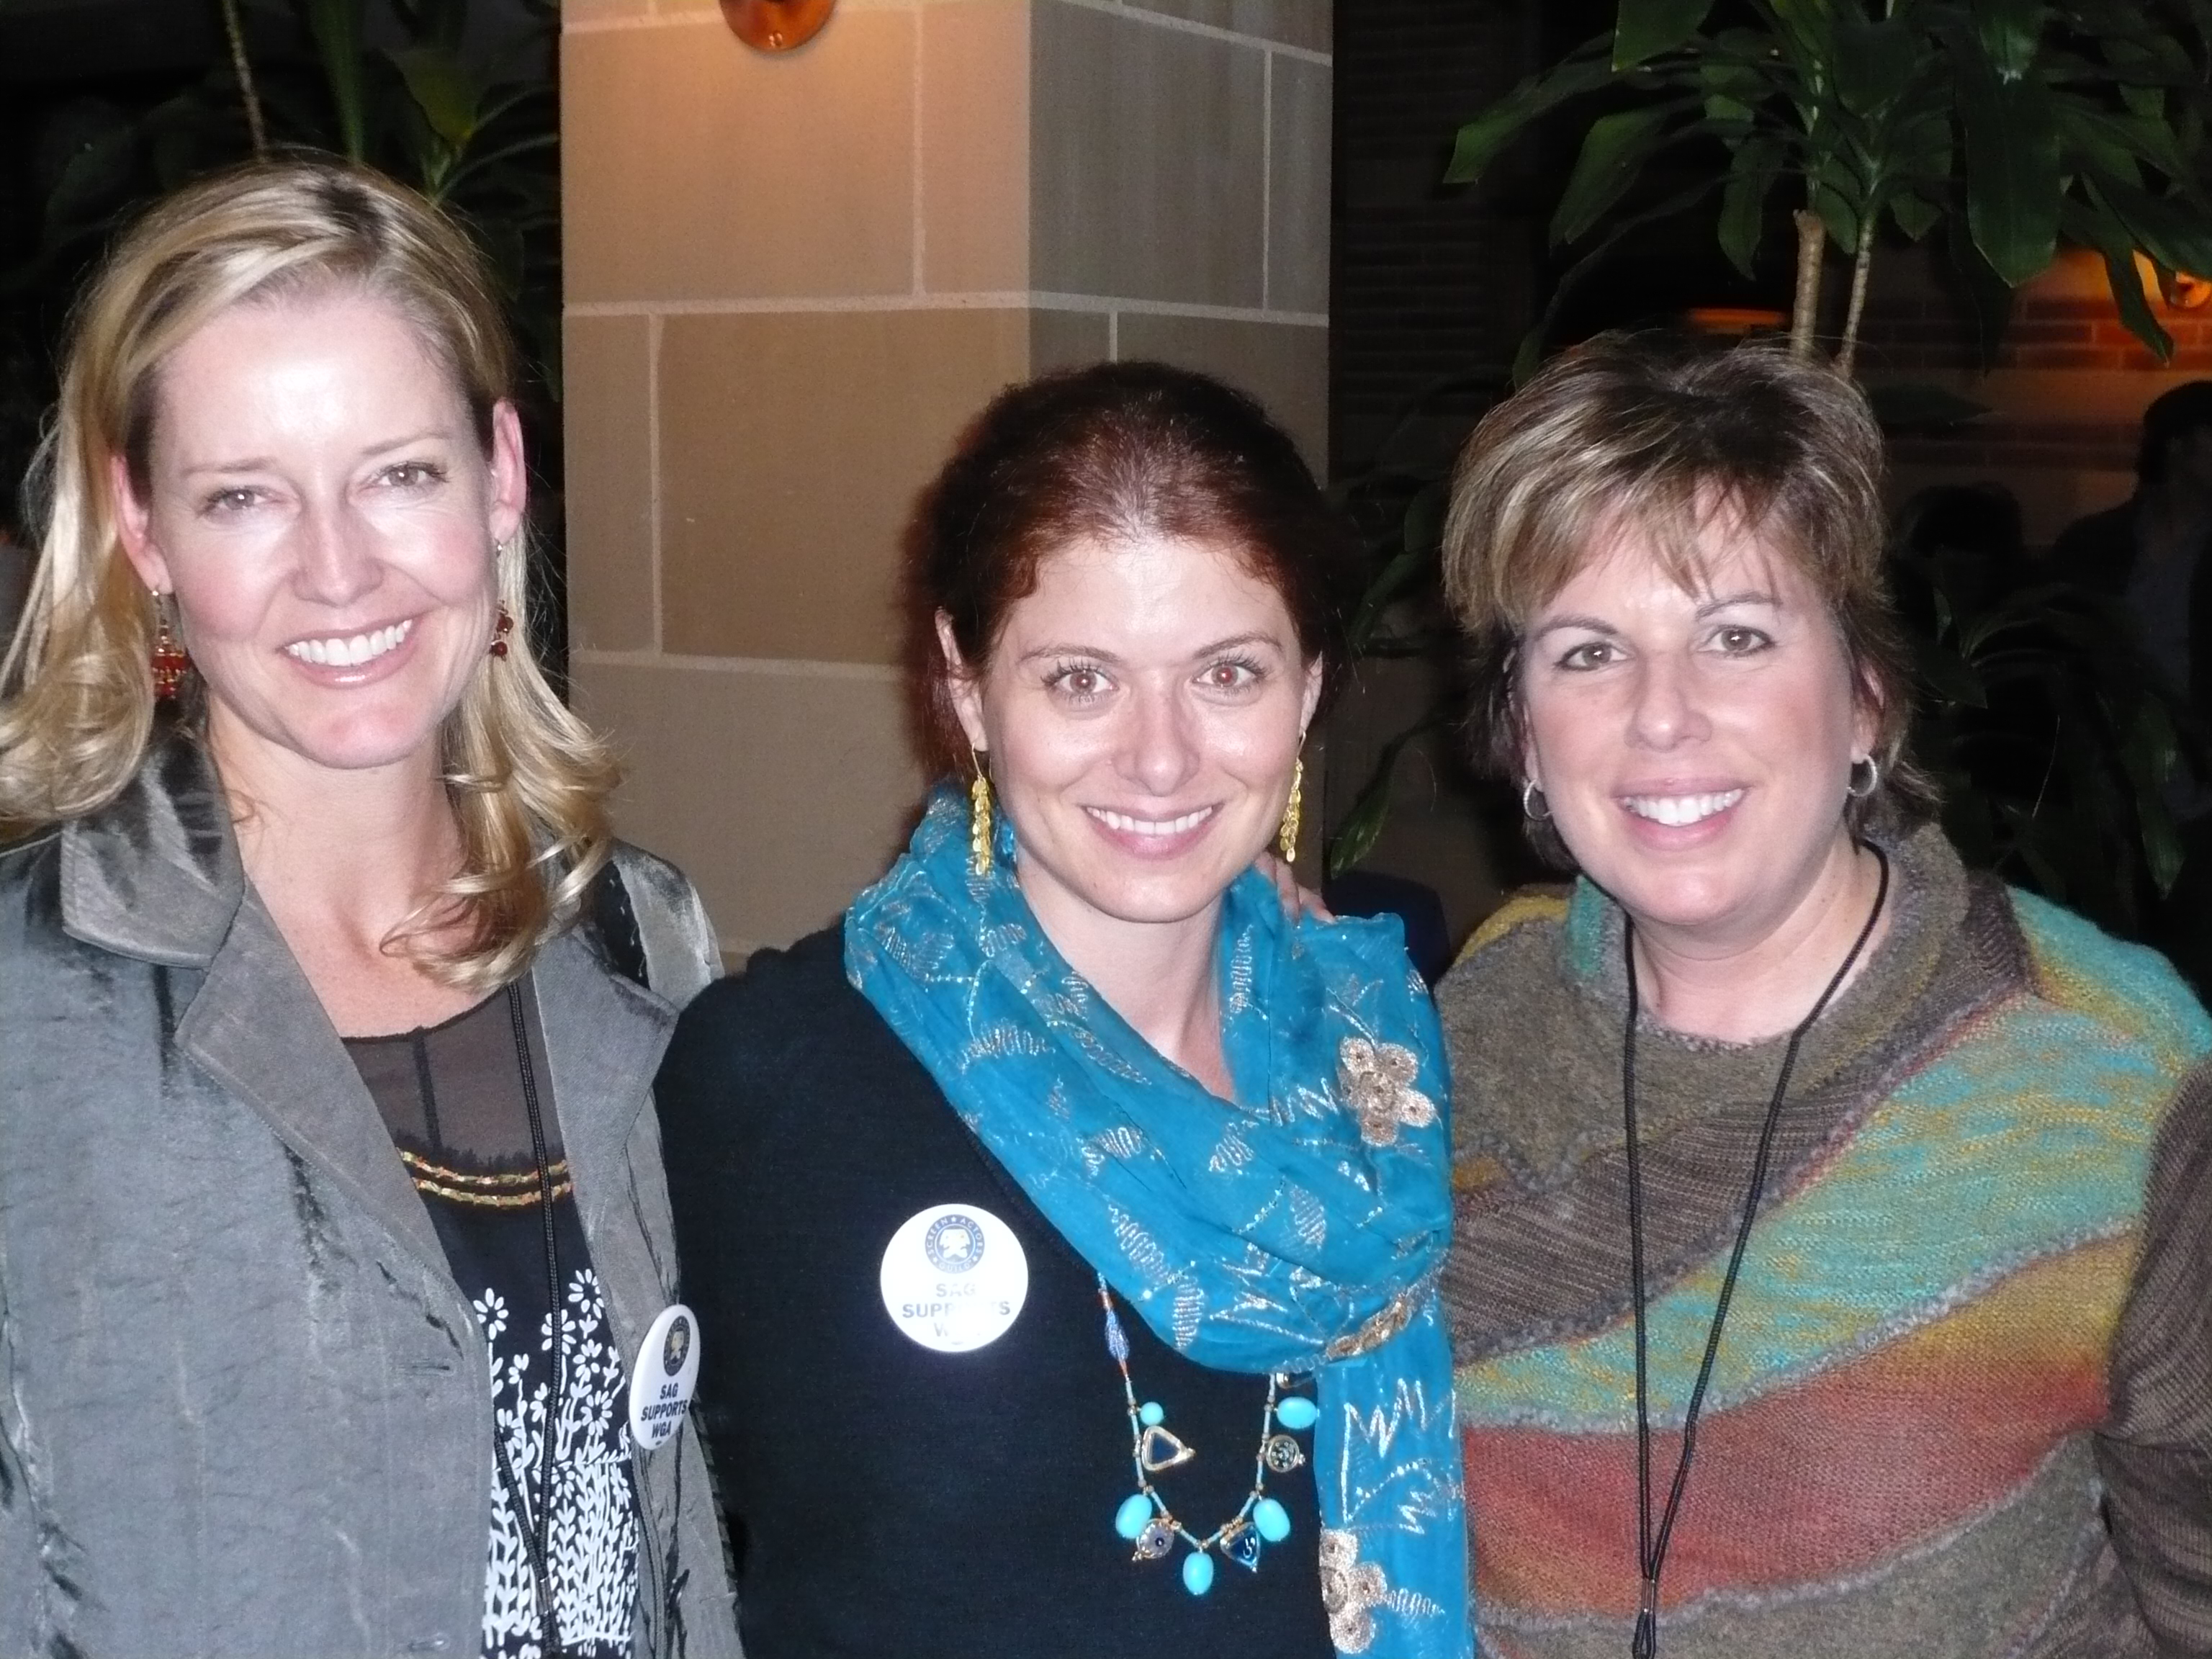 Susan Savage, Debra Messing, and Ilyanne Kichaven @ the WriteAid benefit @ Royce Hall